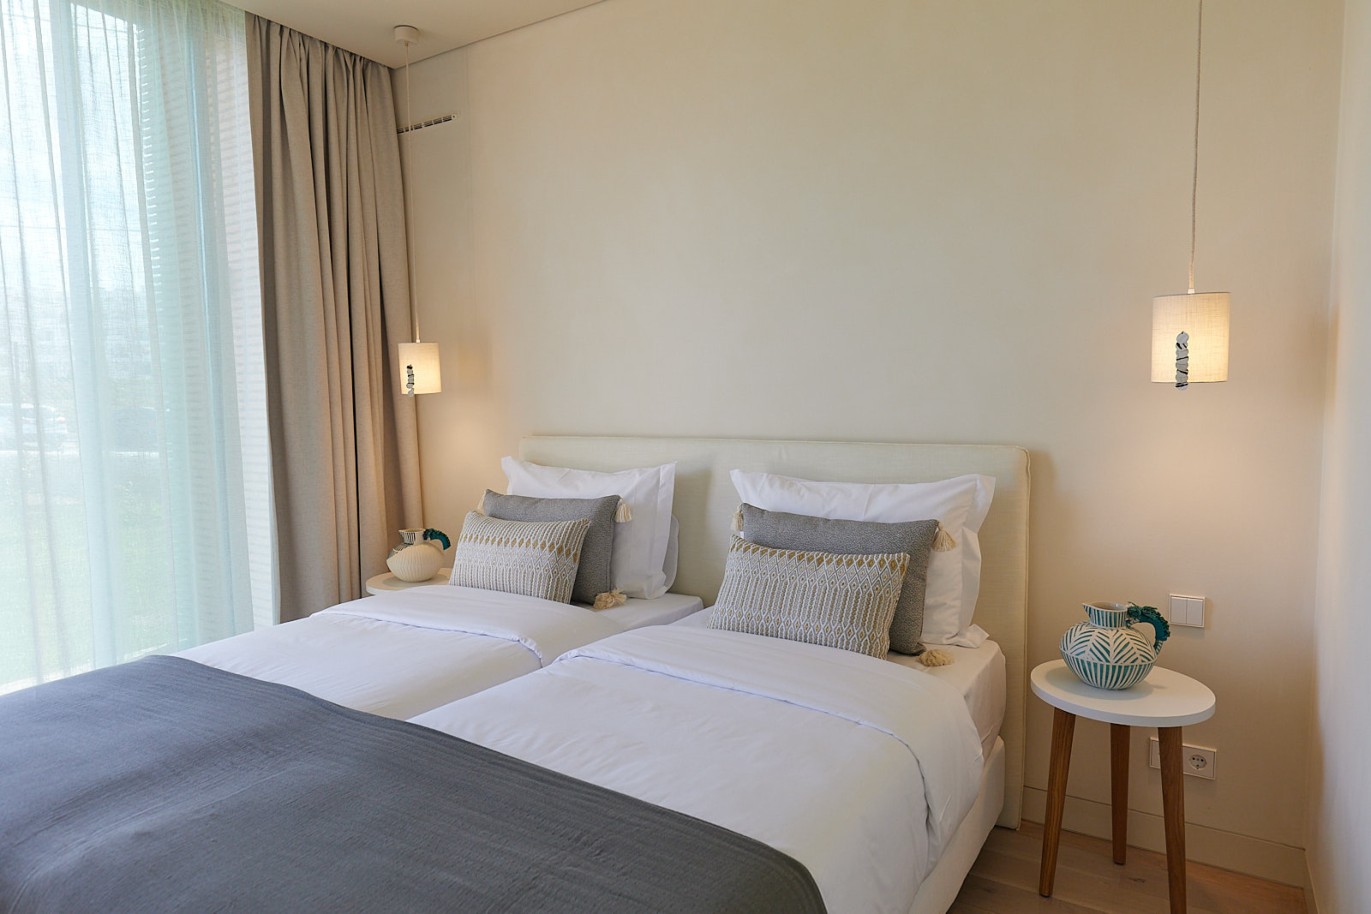 2 bedroom apartment in resort, for sale in Porches, Algarve_229193